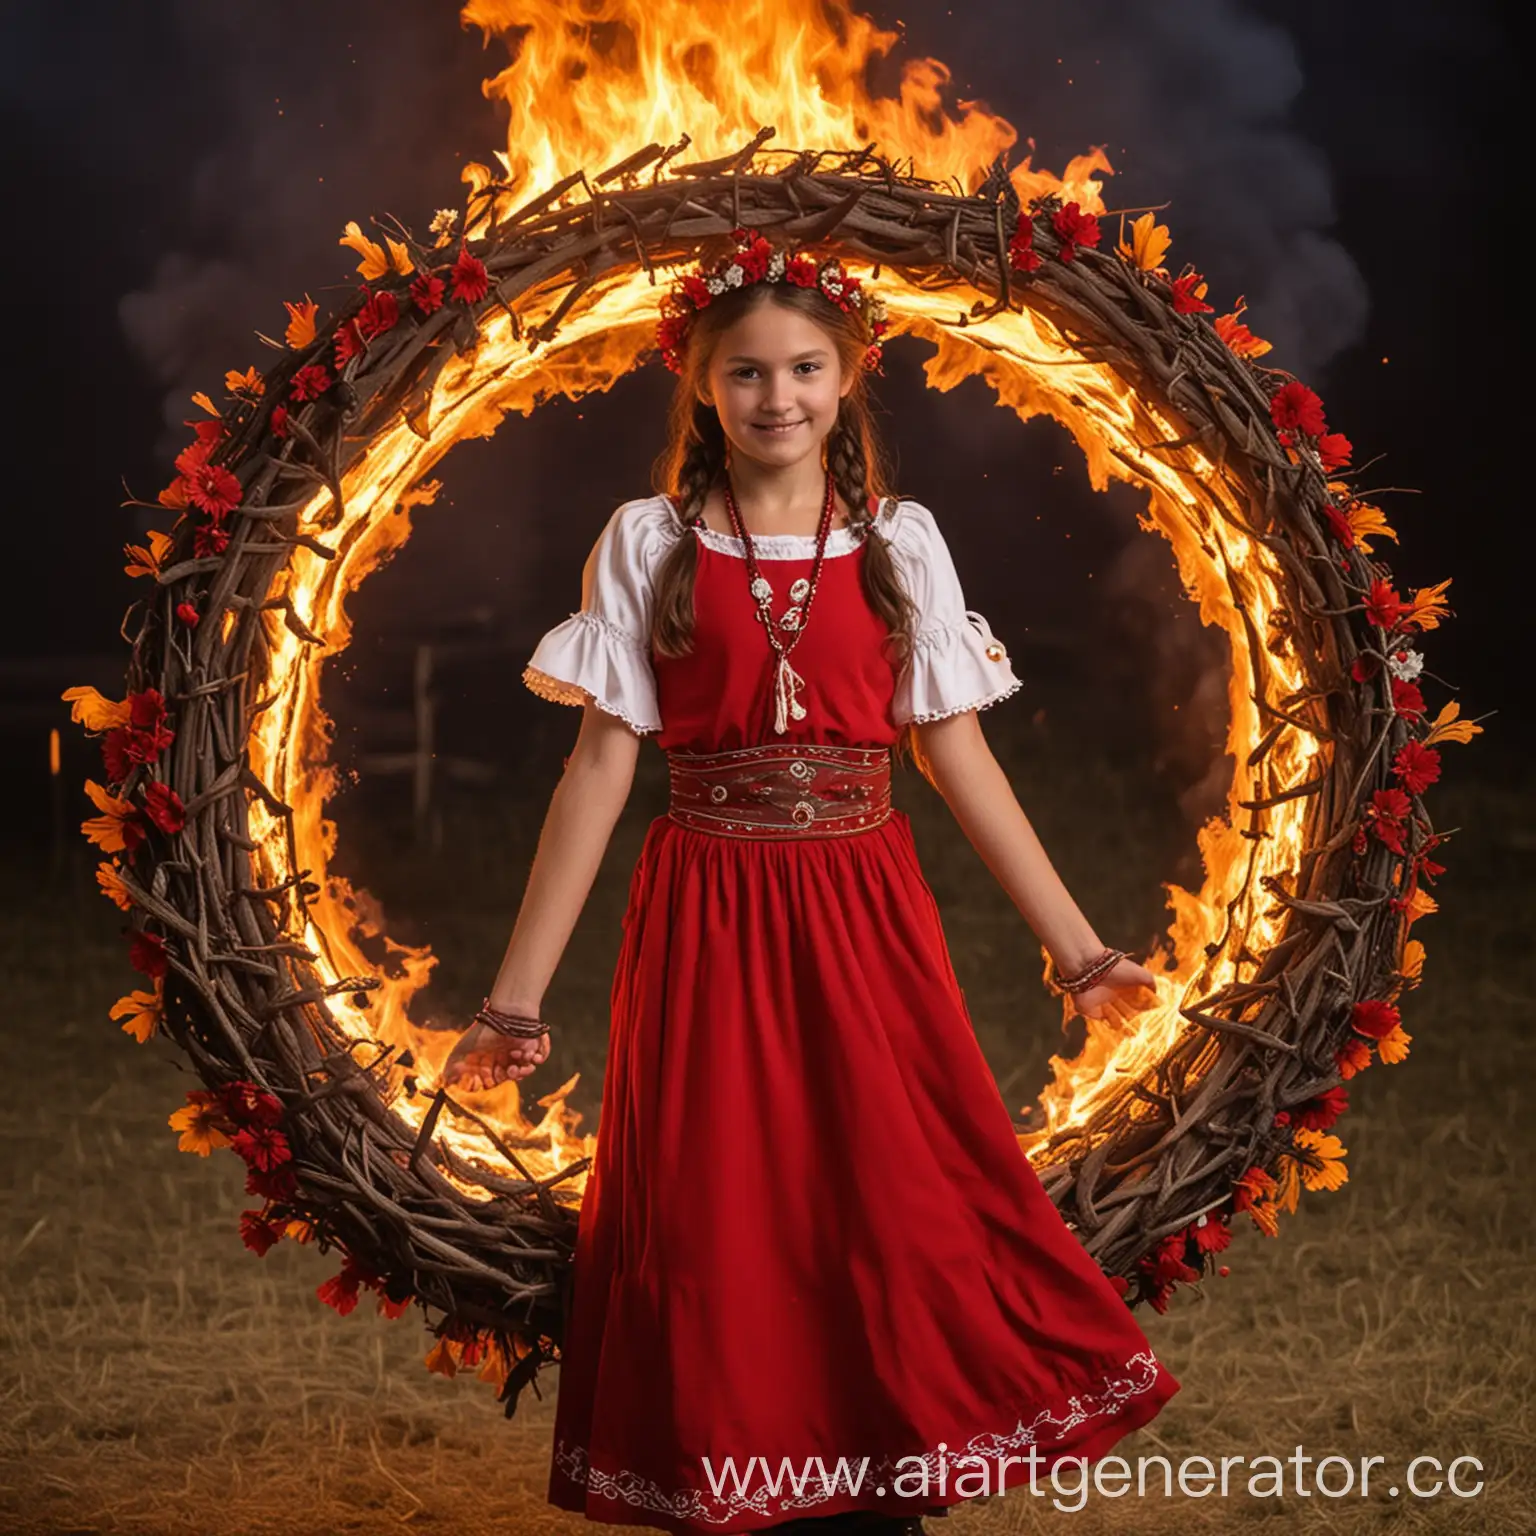 Joyful-Celebration-Girl-Dancing-Around-a-Fire-with-a-Wreath